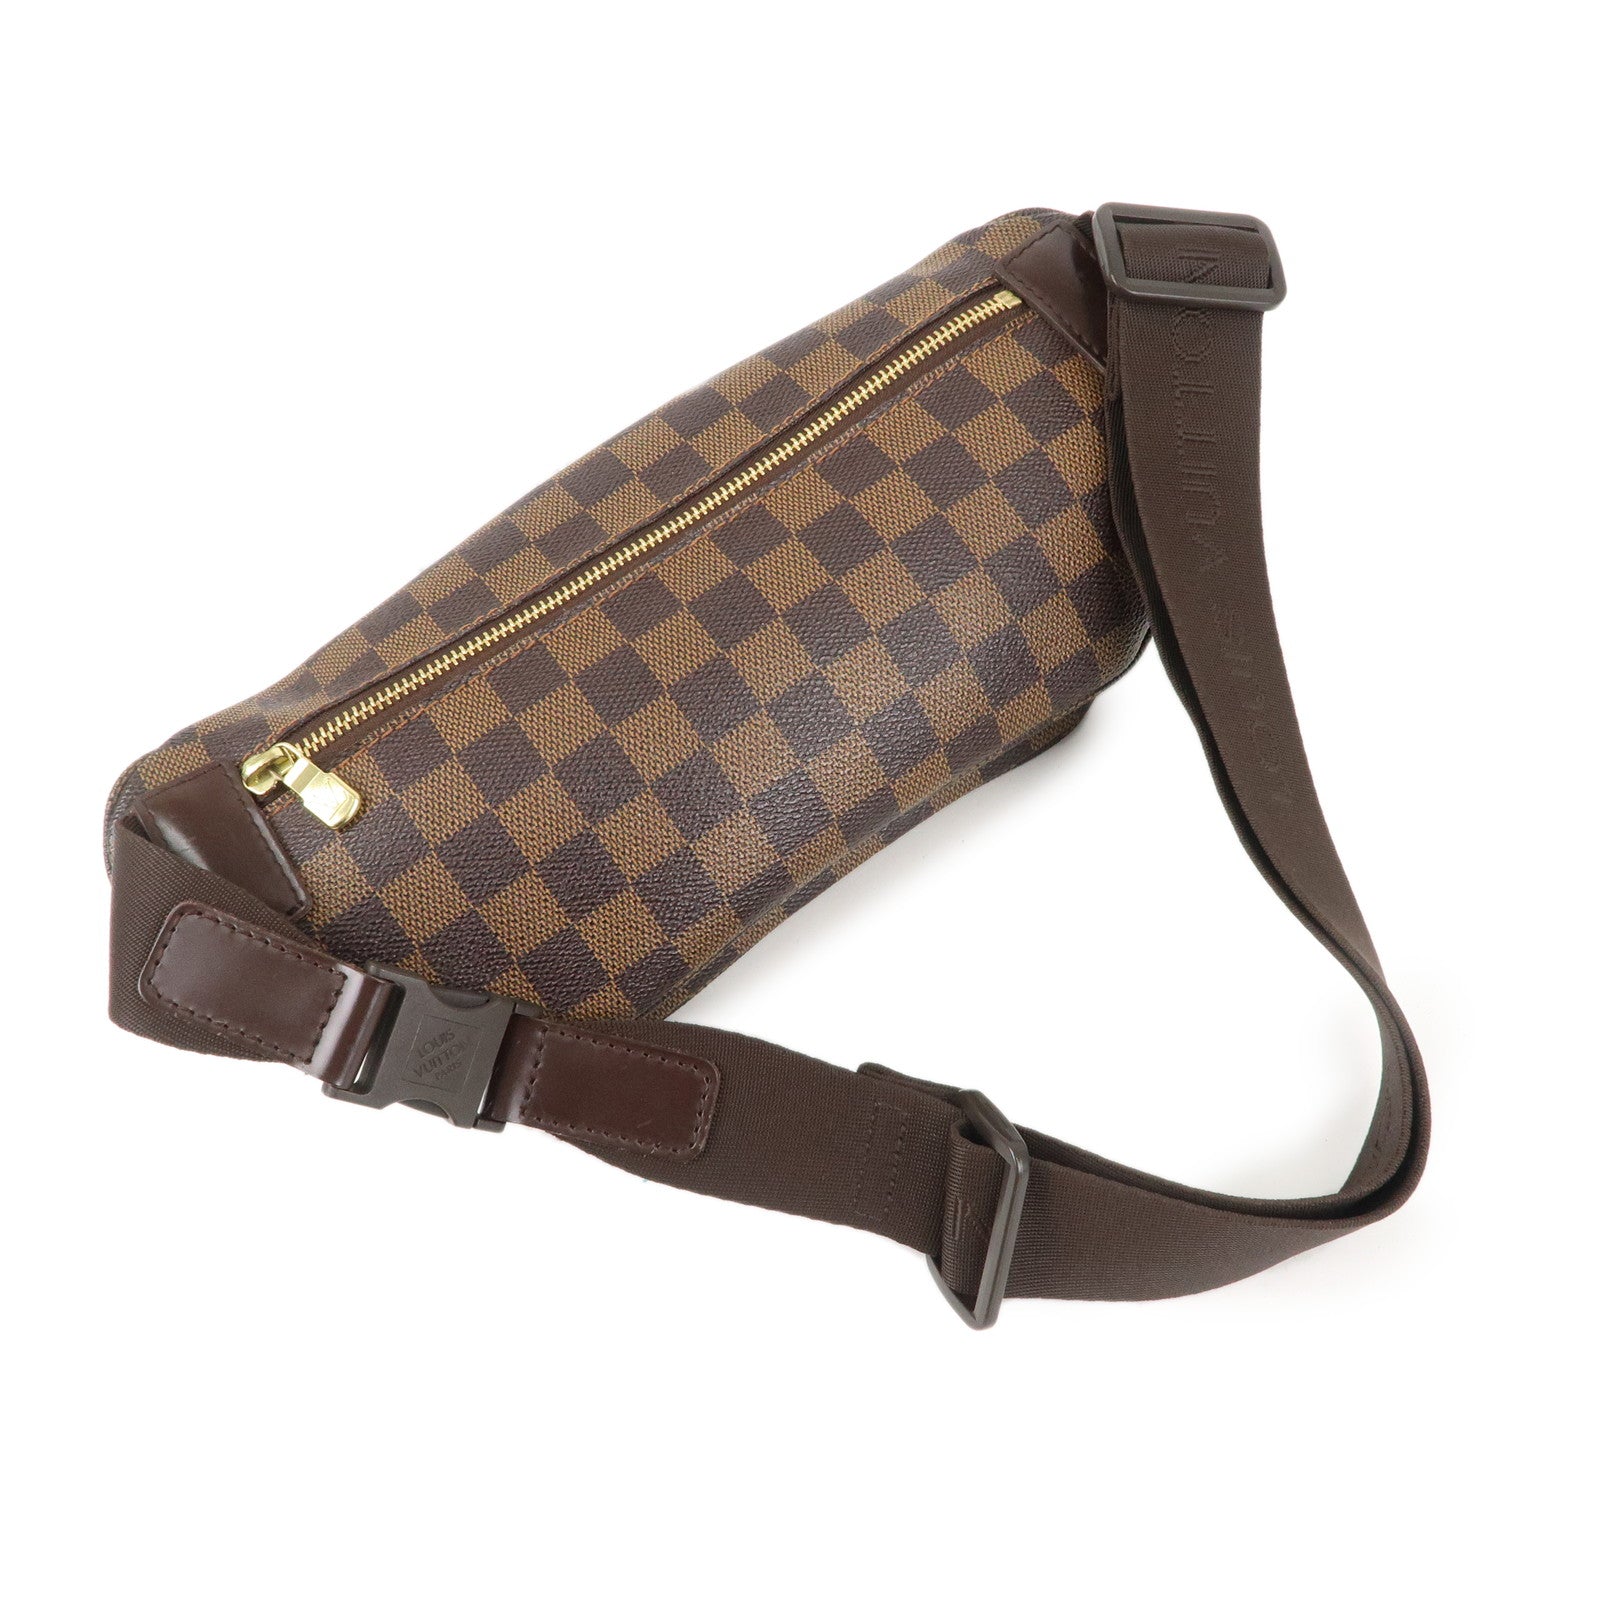 Louis-Vuitton-Damier-Bam-Bag-Melville-Waist-Bag-Body-Bag-N51172